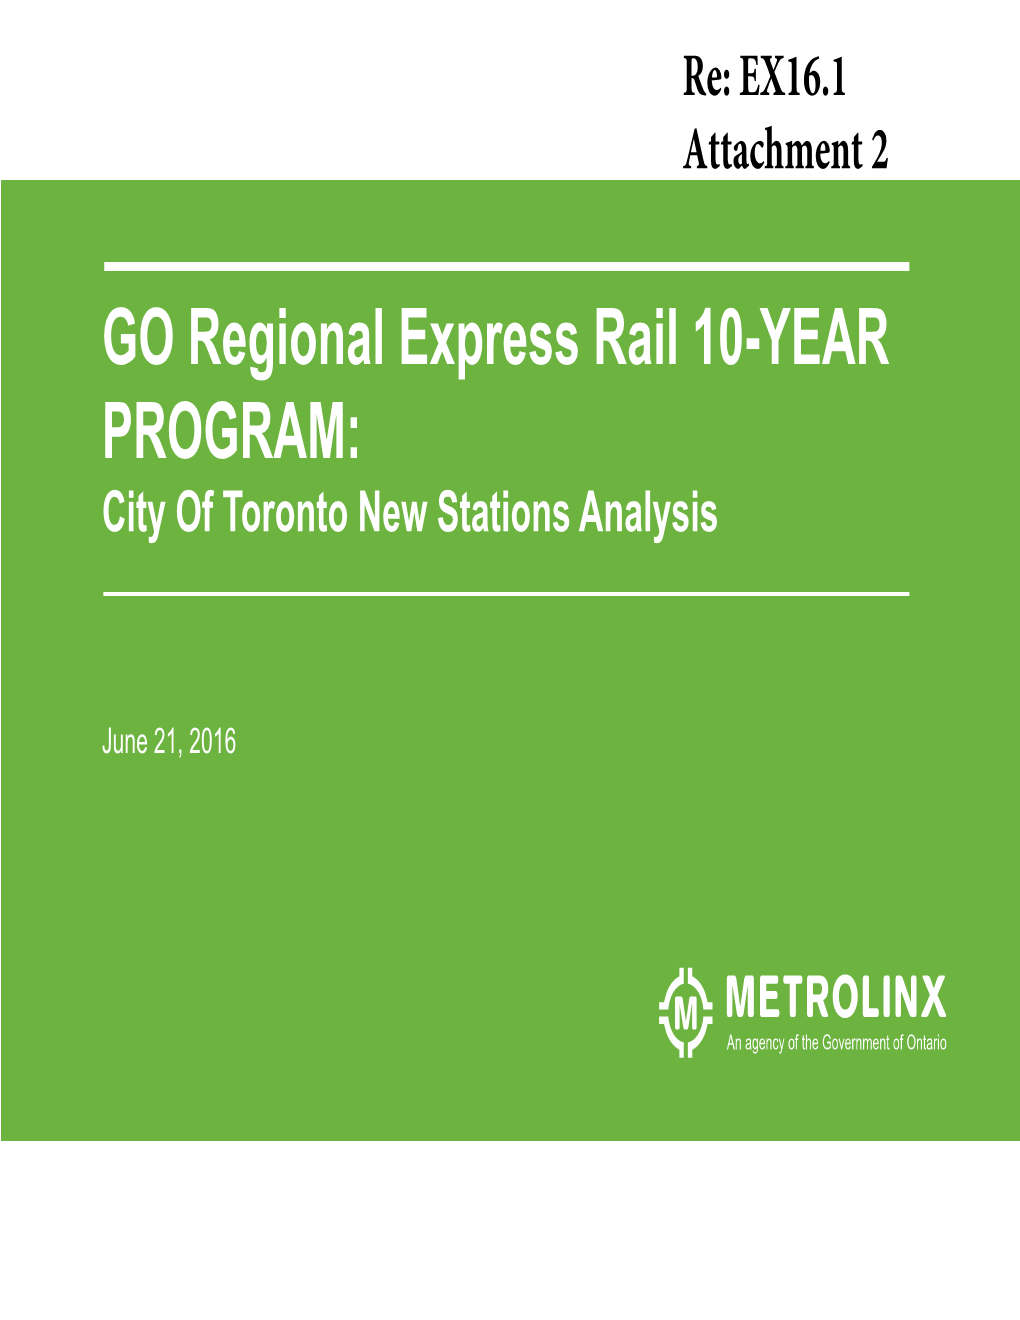 City of Toronto New Stations Analysis